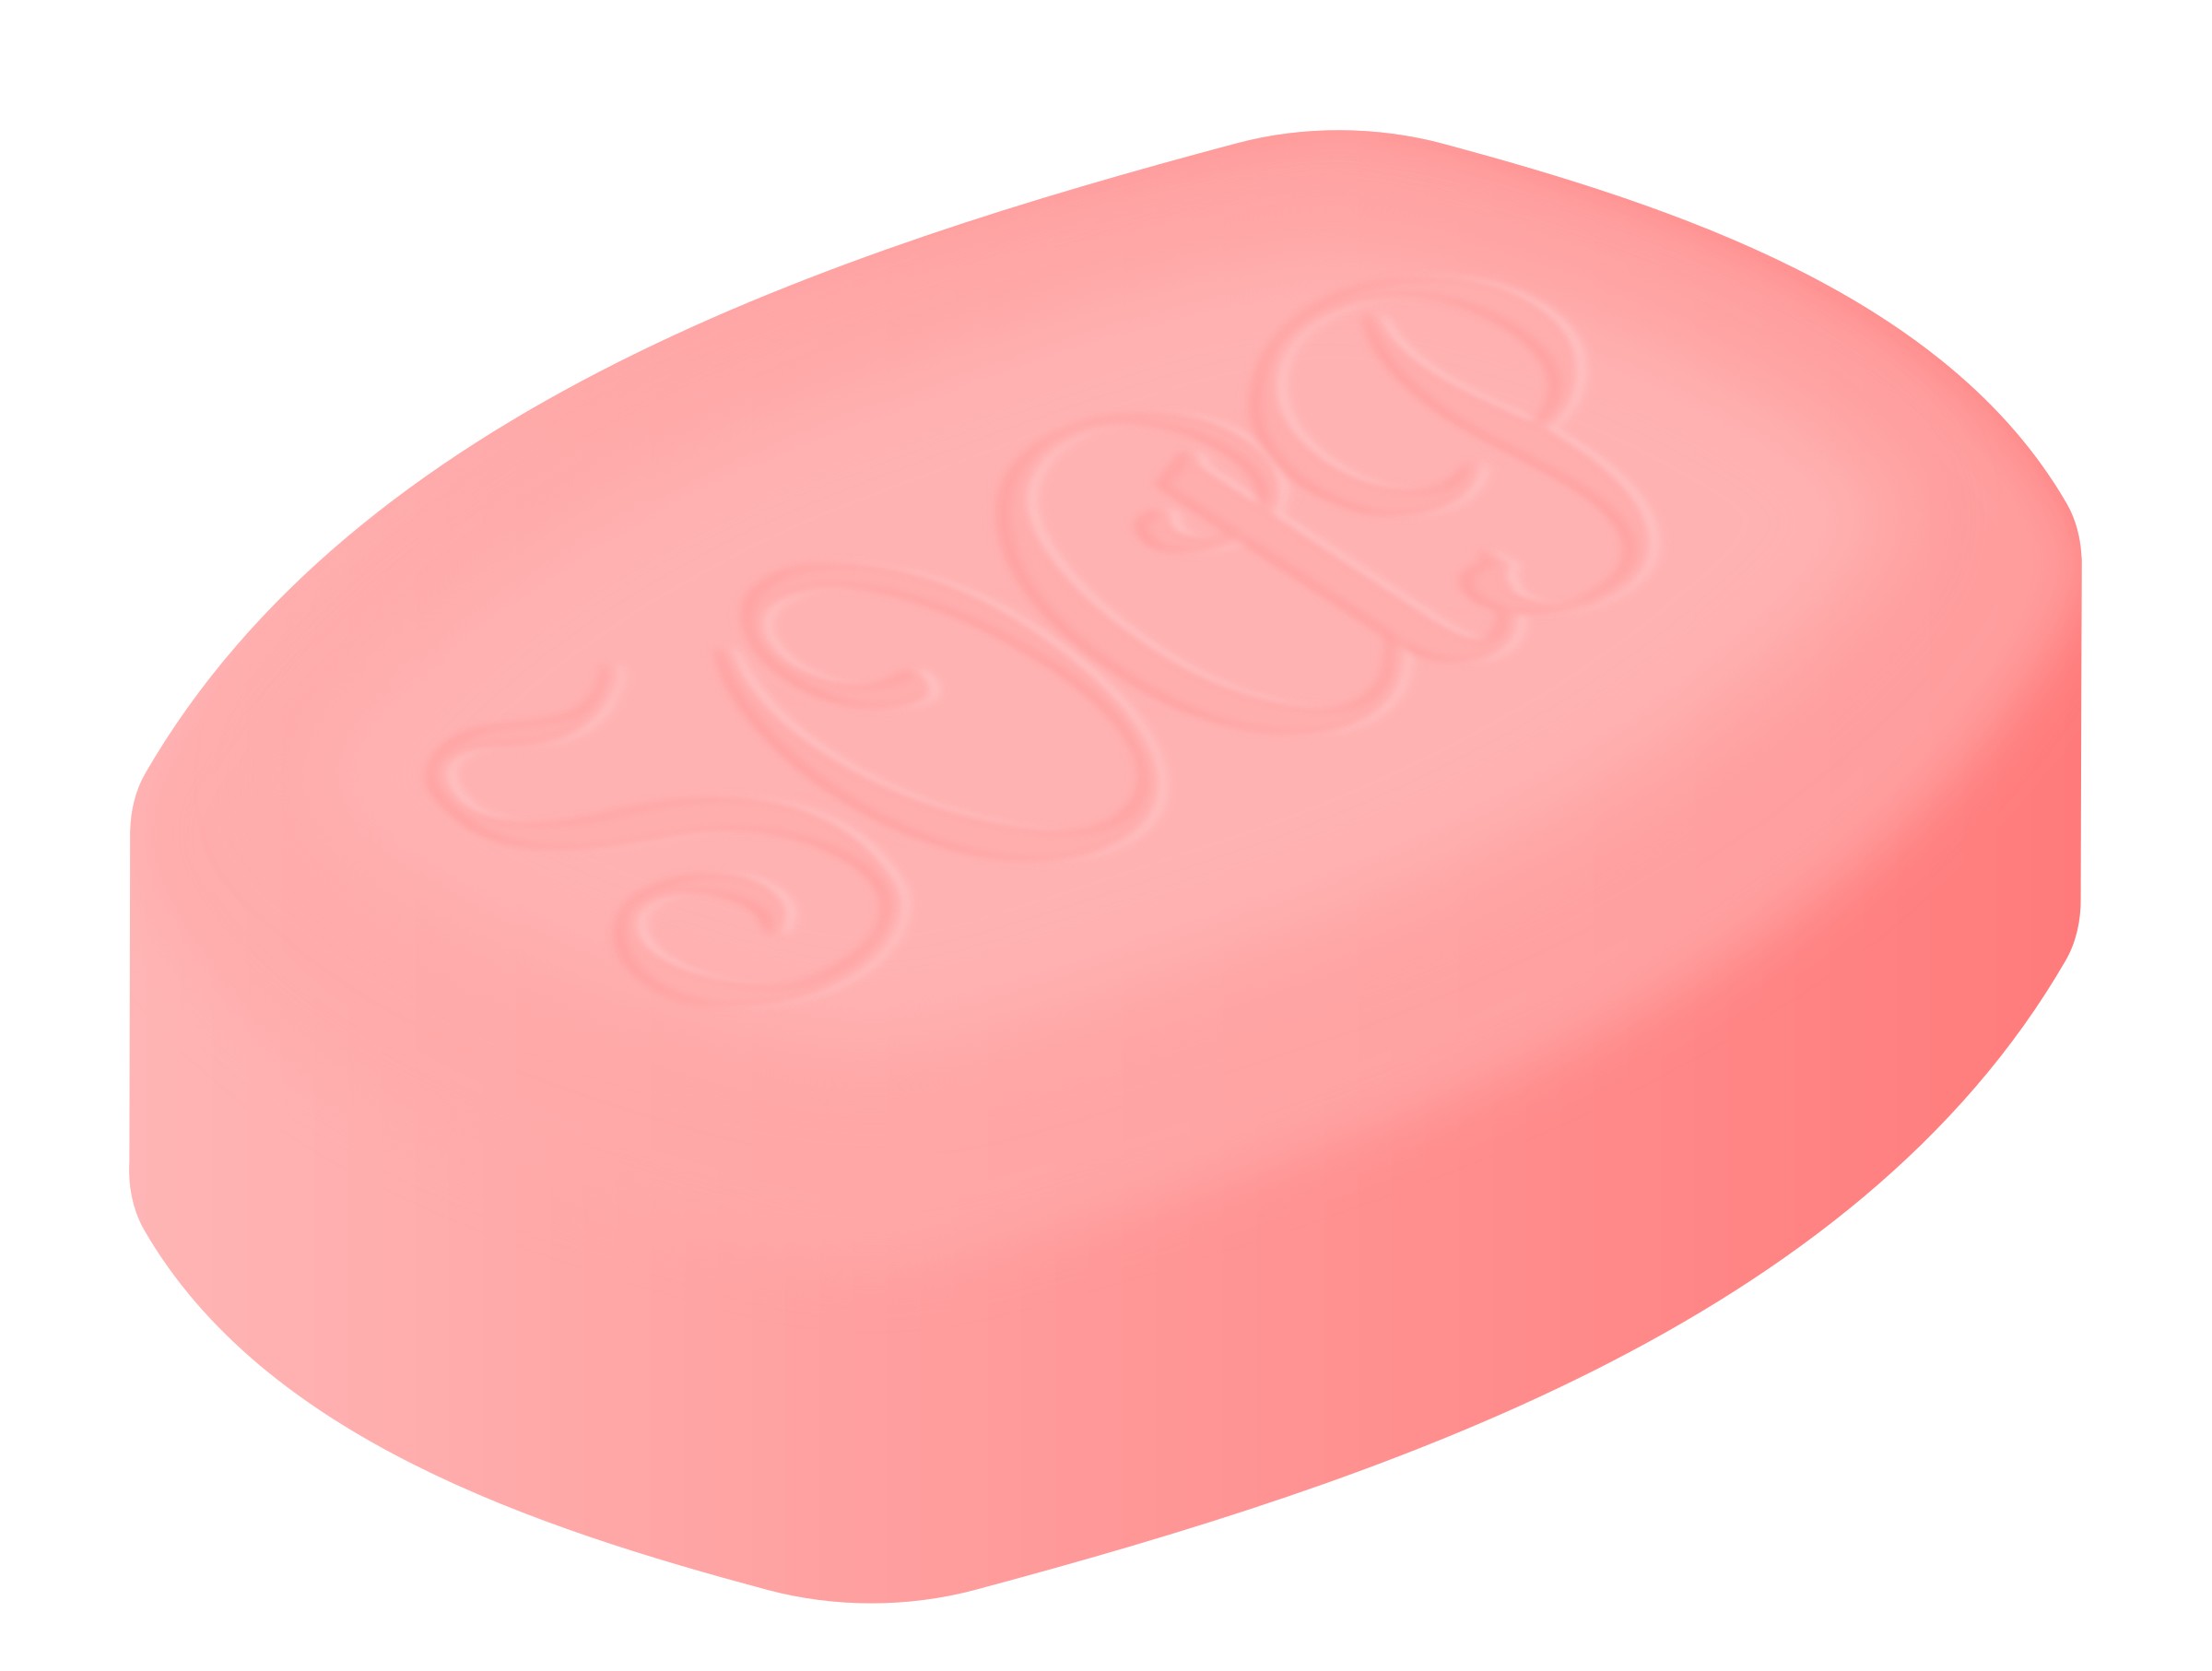 bar-of-soap